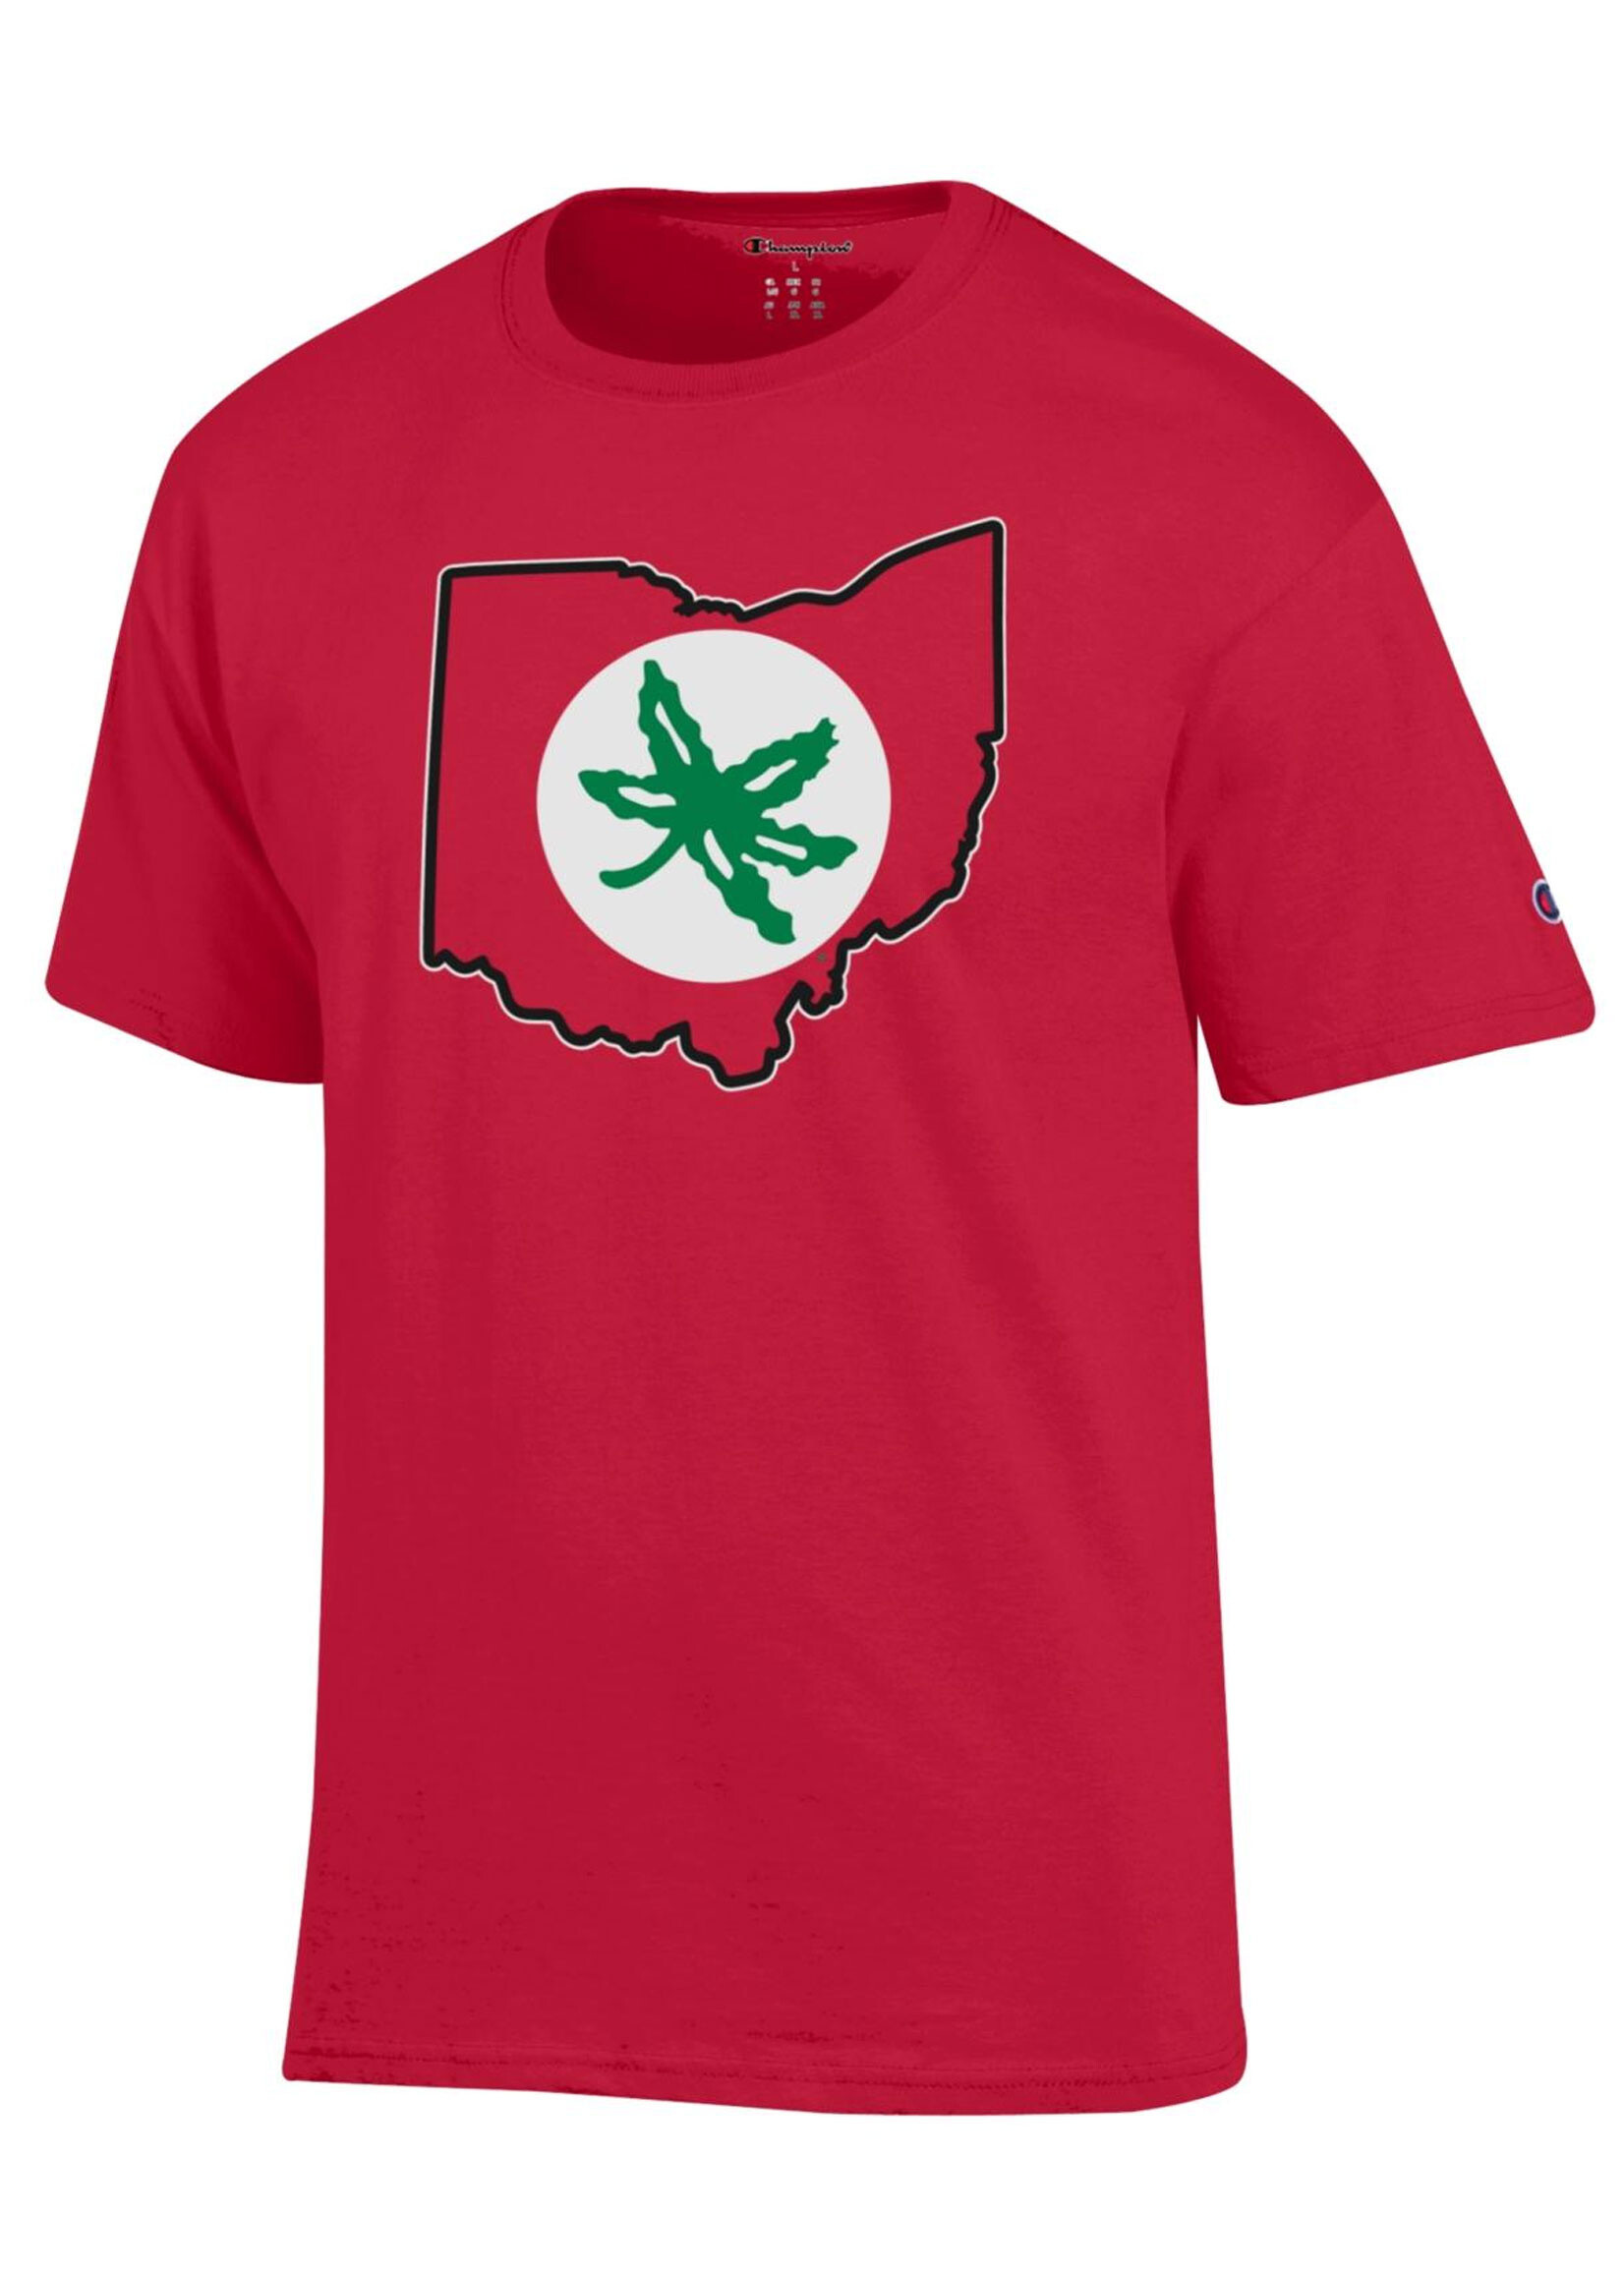 Ohio State Buckeyes Leaf & State T-Shirt